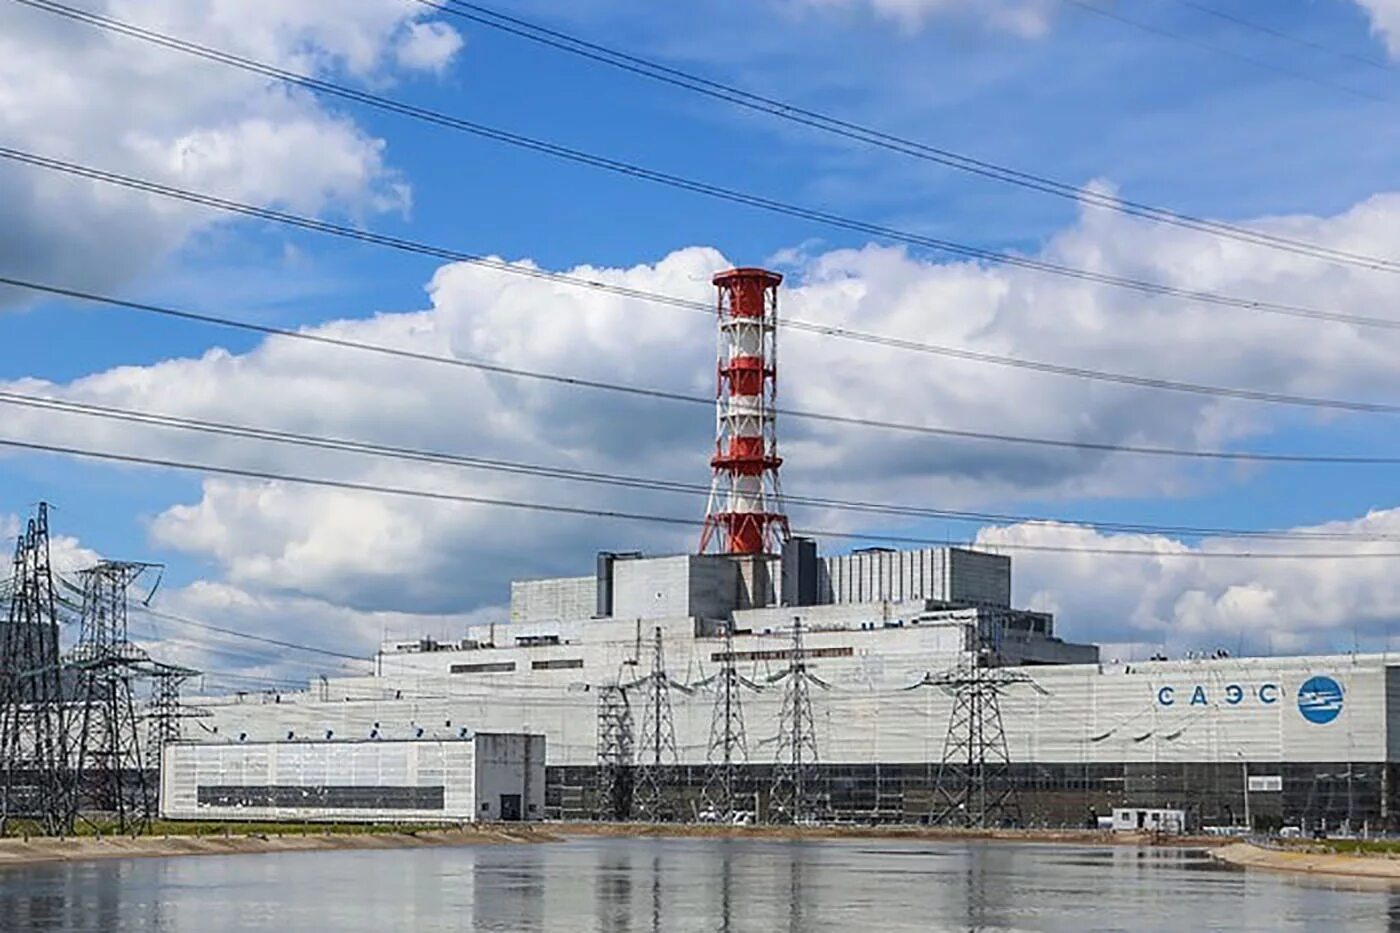 Го аэс. САЭС Смоленская атомная станция. Атомная станция Десногорск. Смоленская АЭС 4 энергоблок. Смоленская АЭС Десногорск.